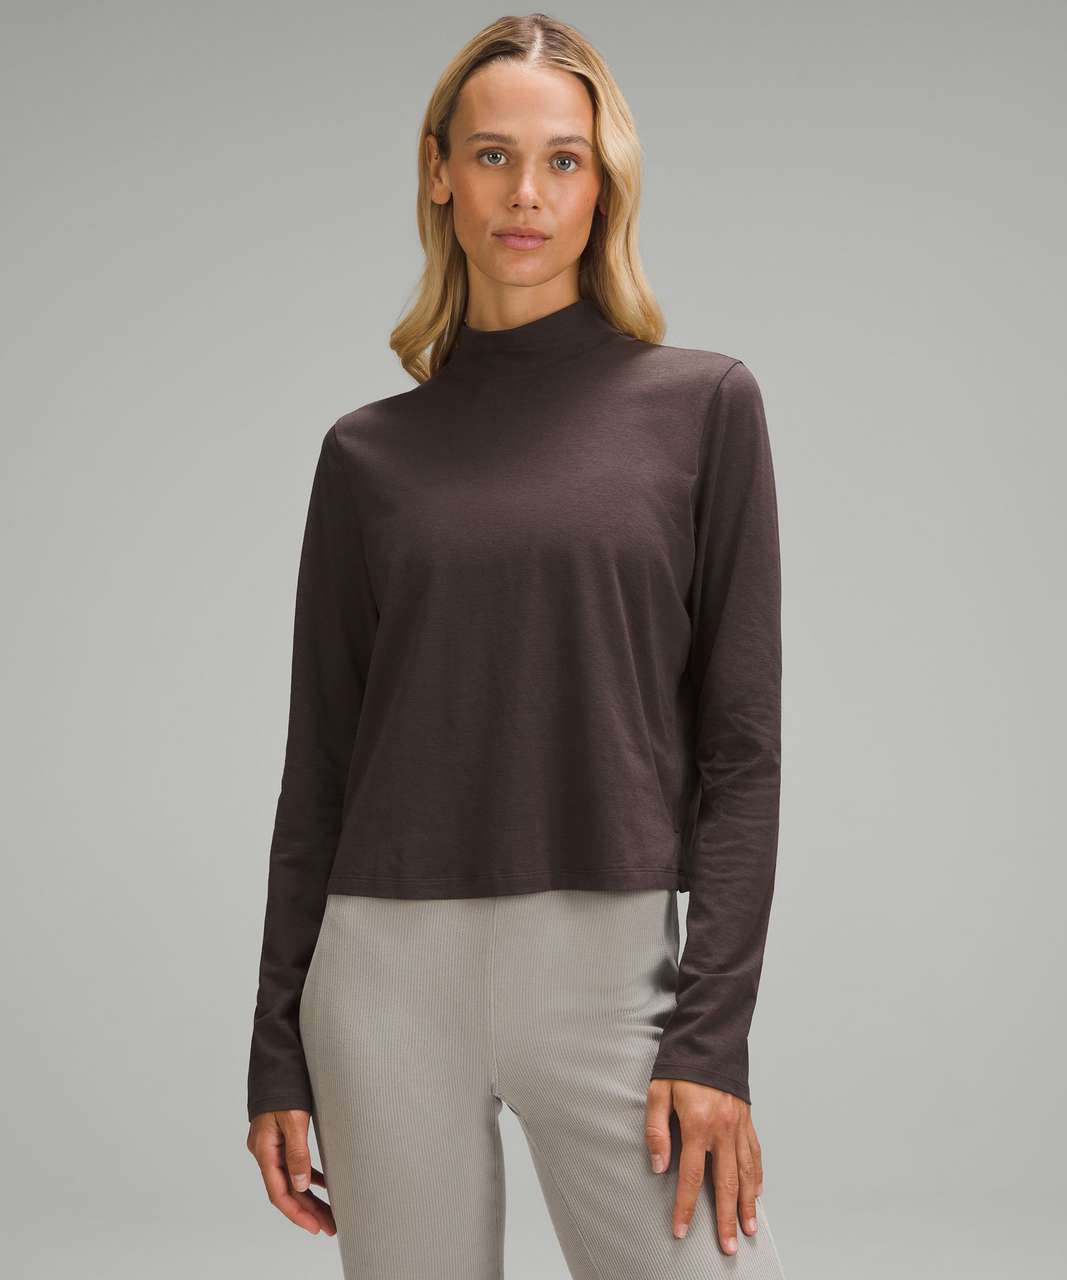 Lululemon Classic-Fit Cotton-Blend Mockneck Long-Sleeve Shirt - Espresso